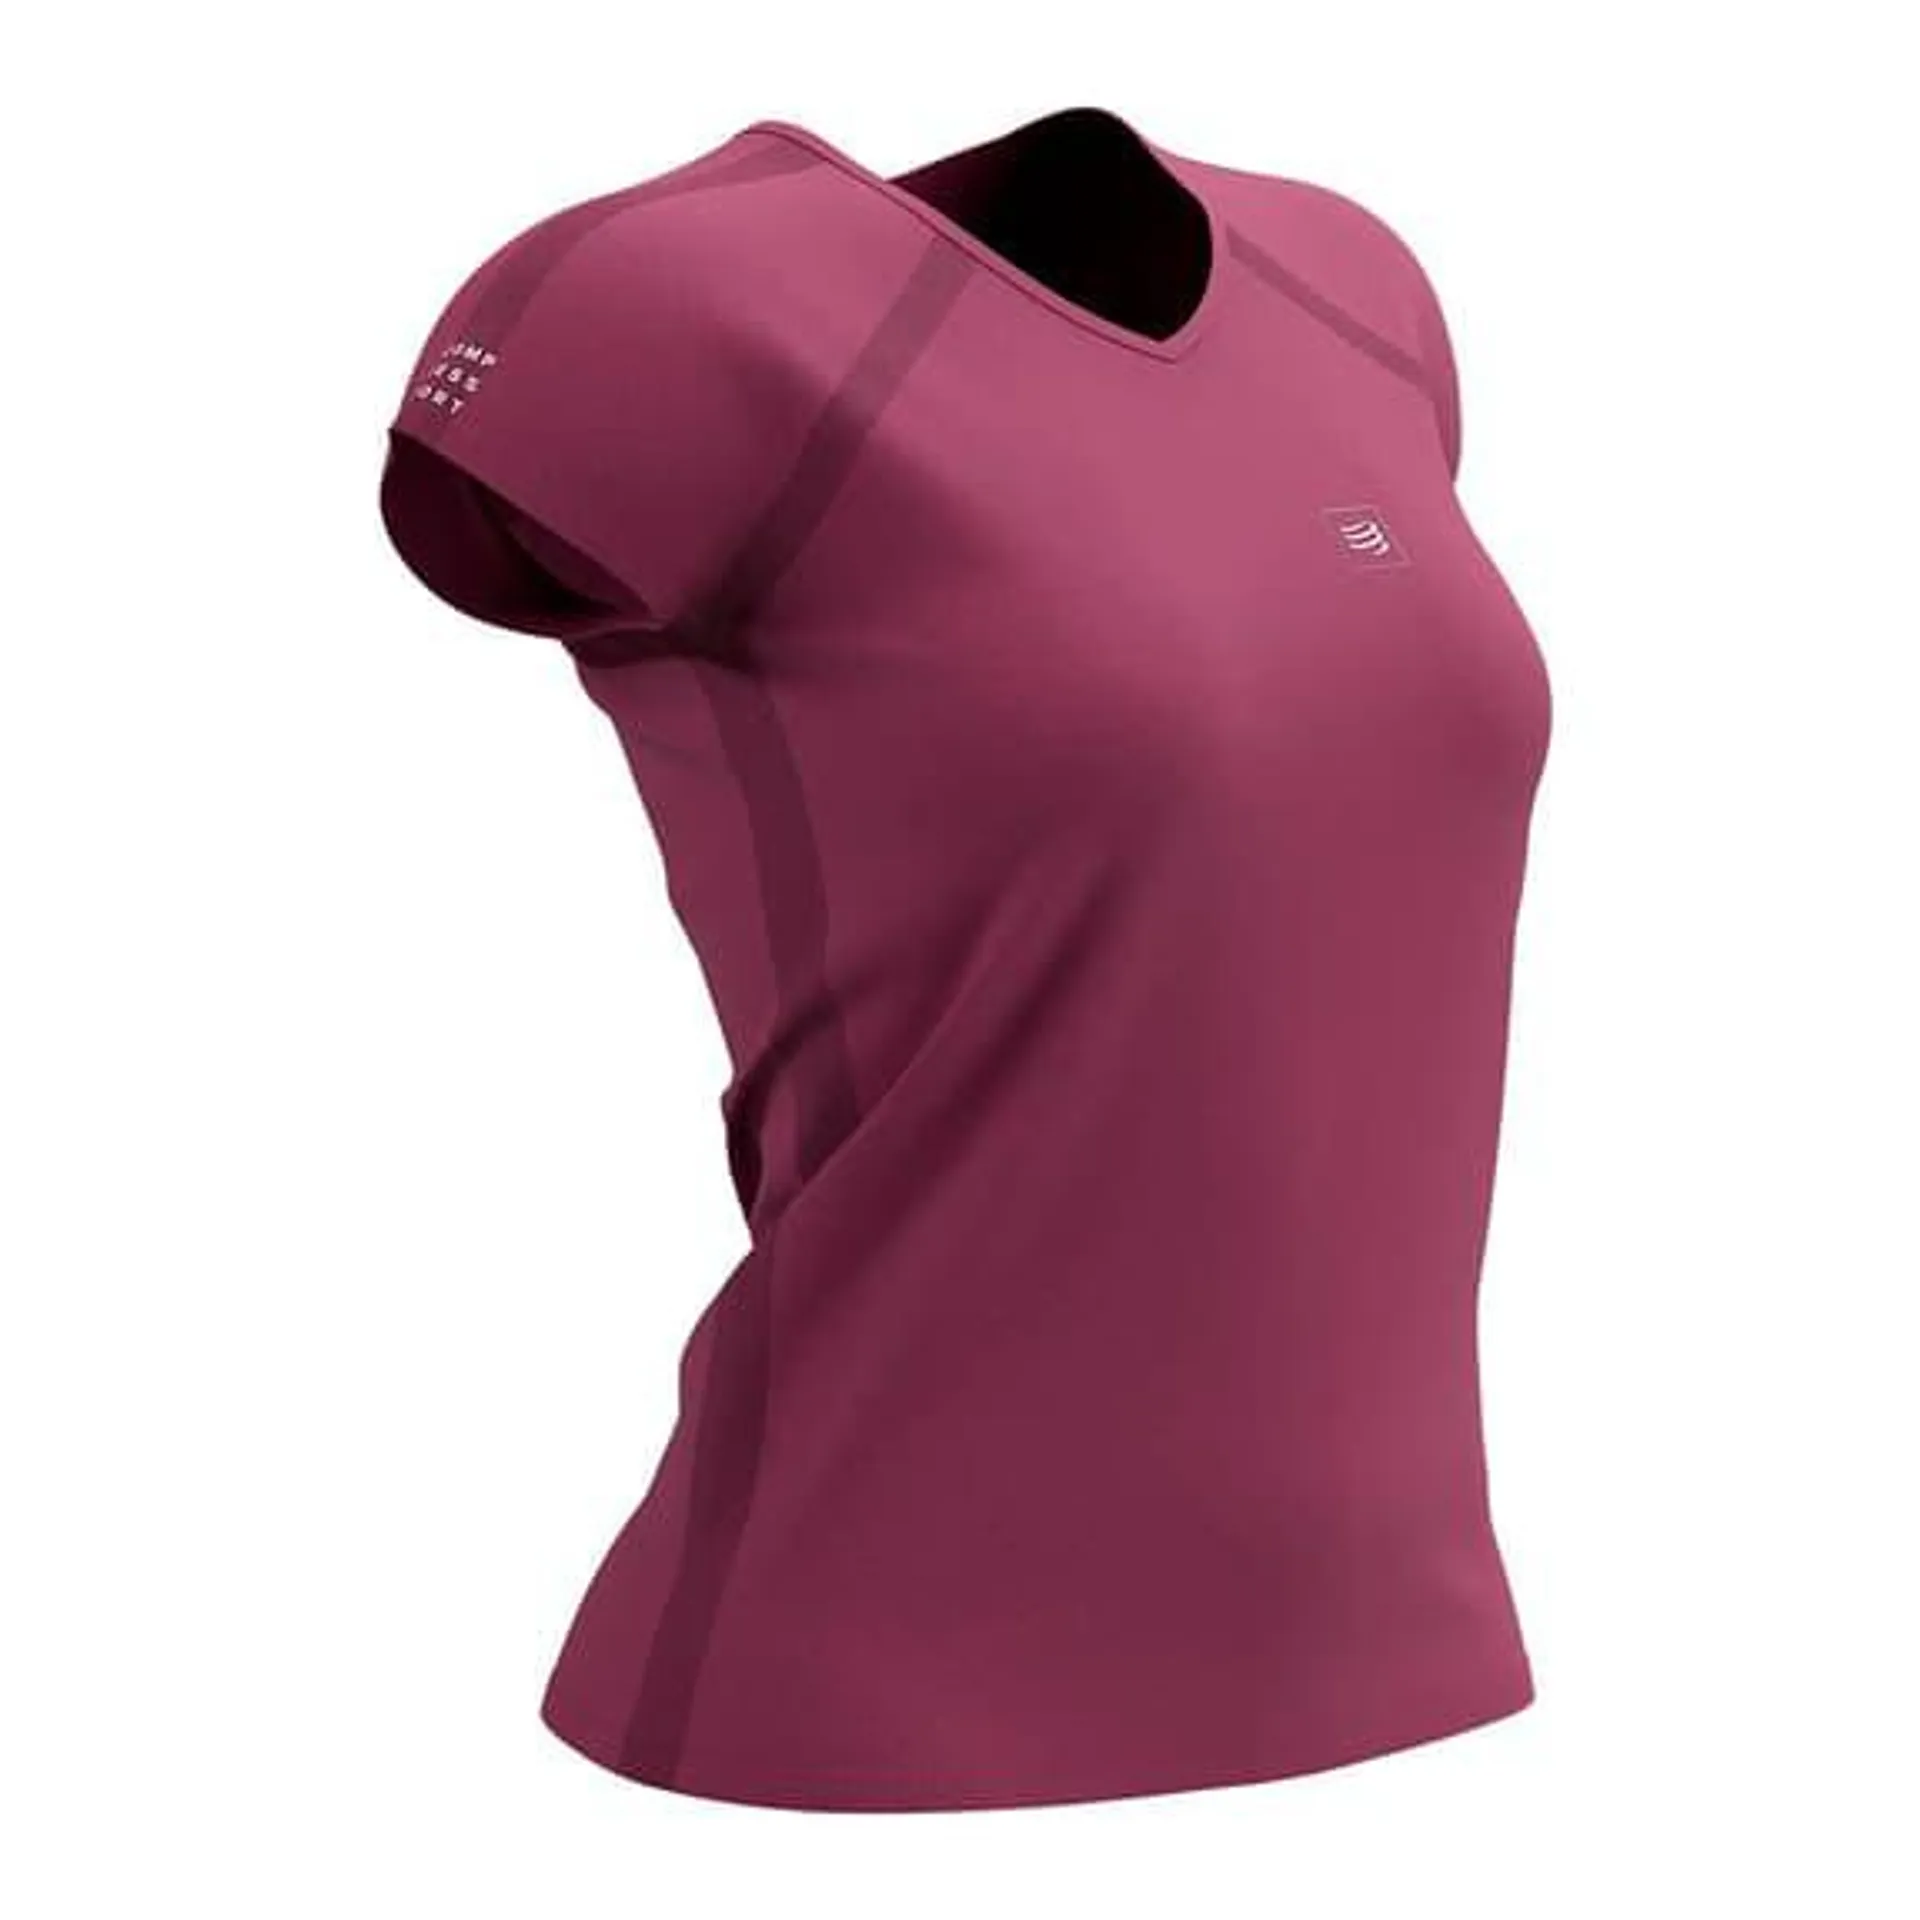 T-shirt Compressport Training manche courte violet femme